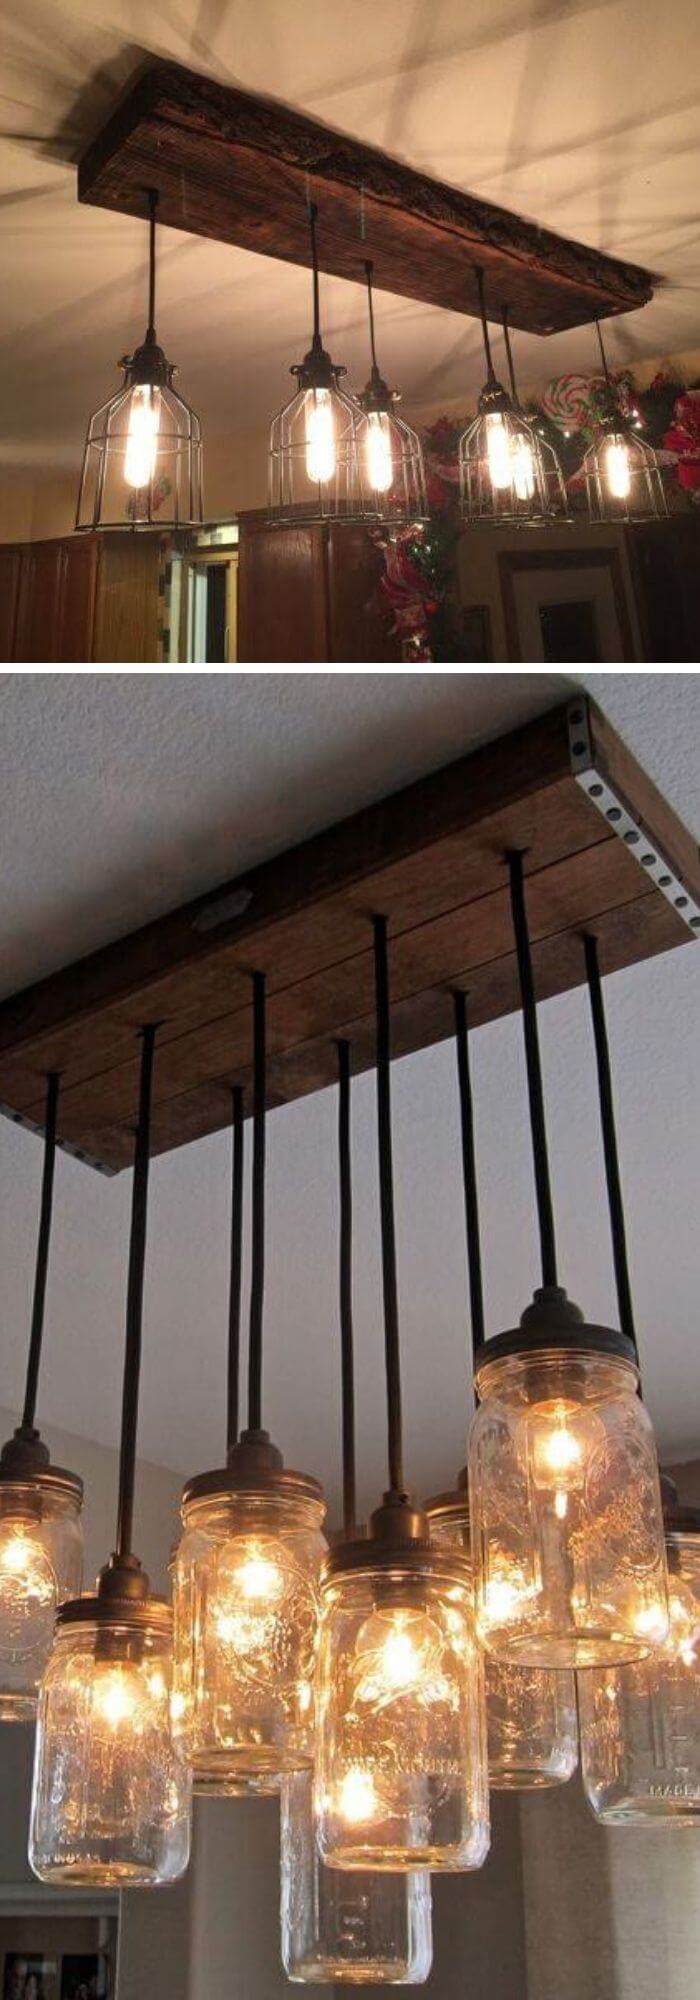 Wooden light hangers